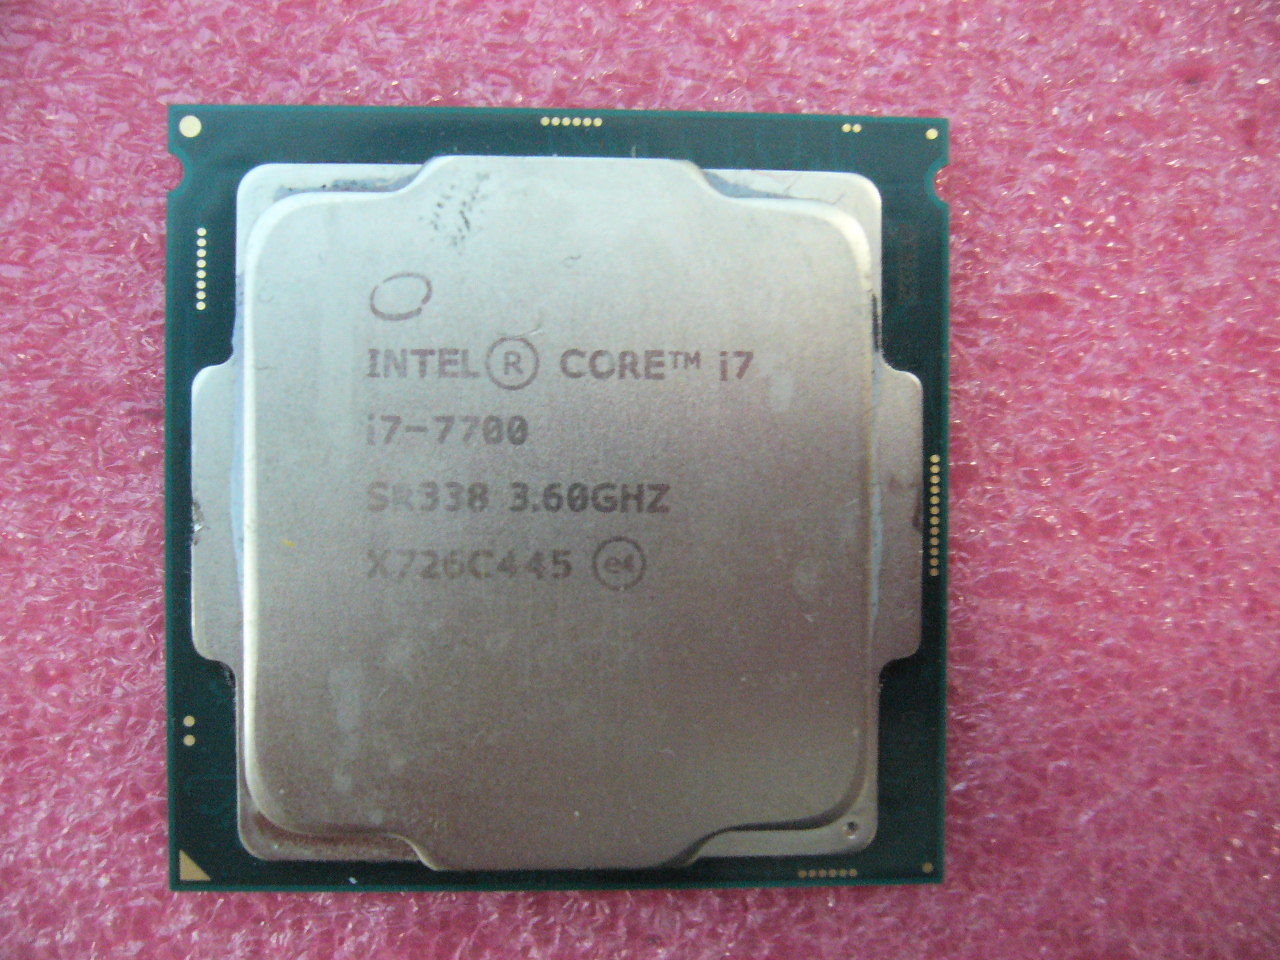 QTY 1x Intel CPU i7-7700 Quad-Cores 3.6Ghz 8MB LGA1151 SR338 NOT WORKING - Click Image to Close